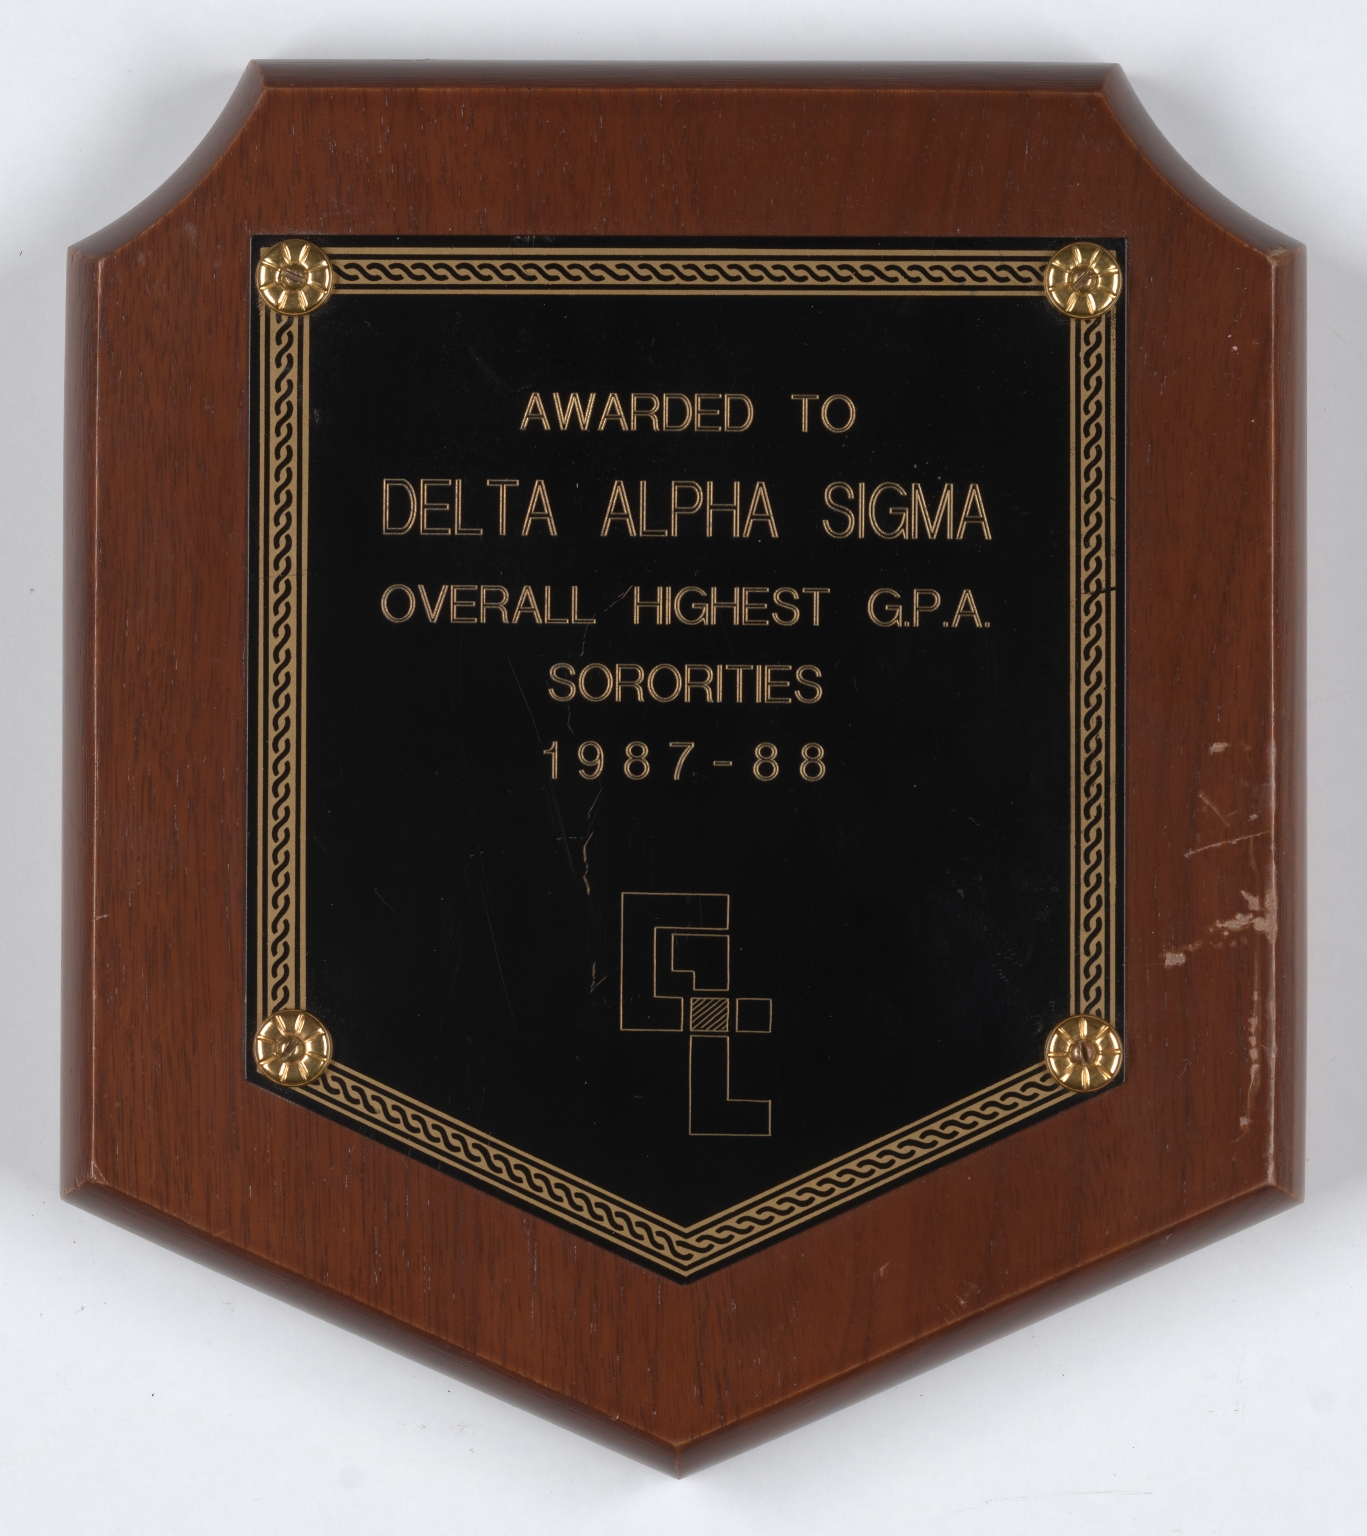 Overall Highest GPA Award plaque